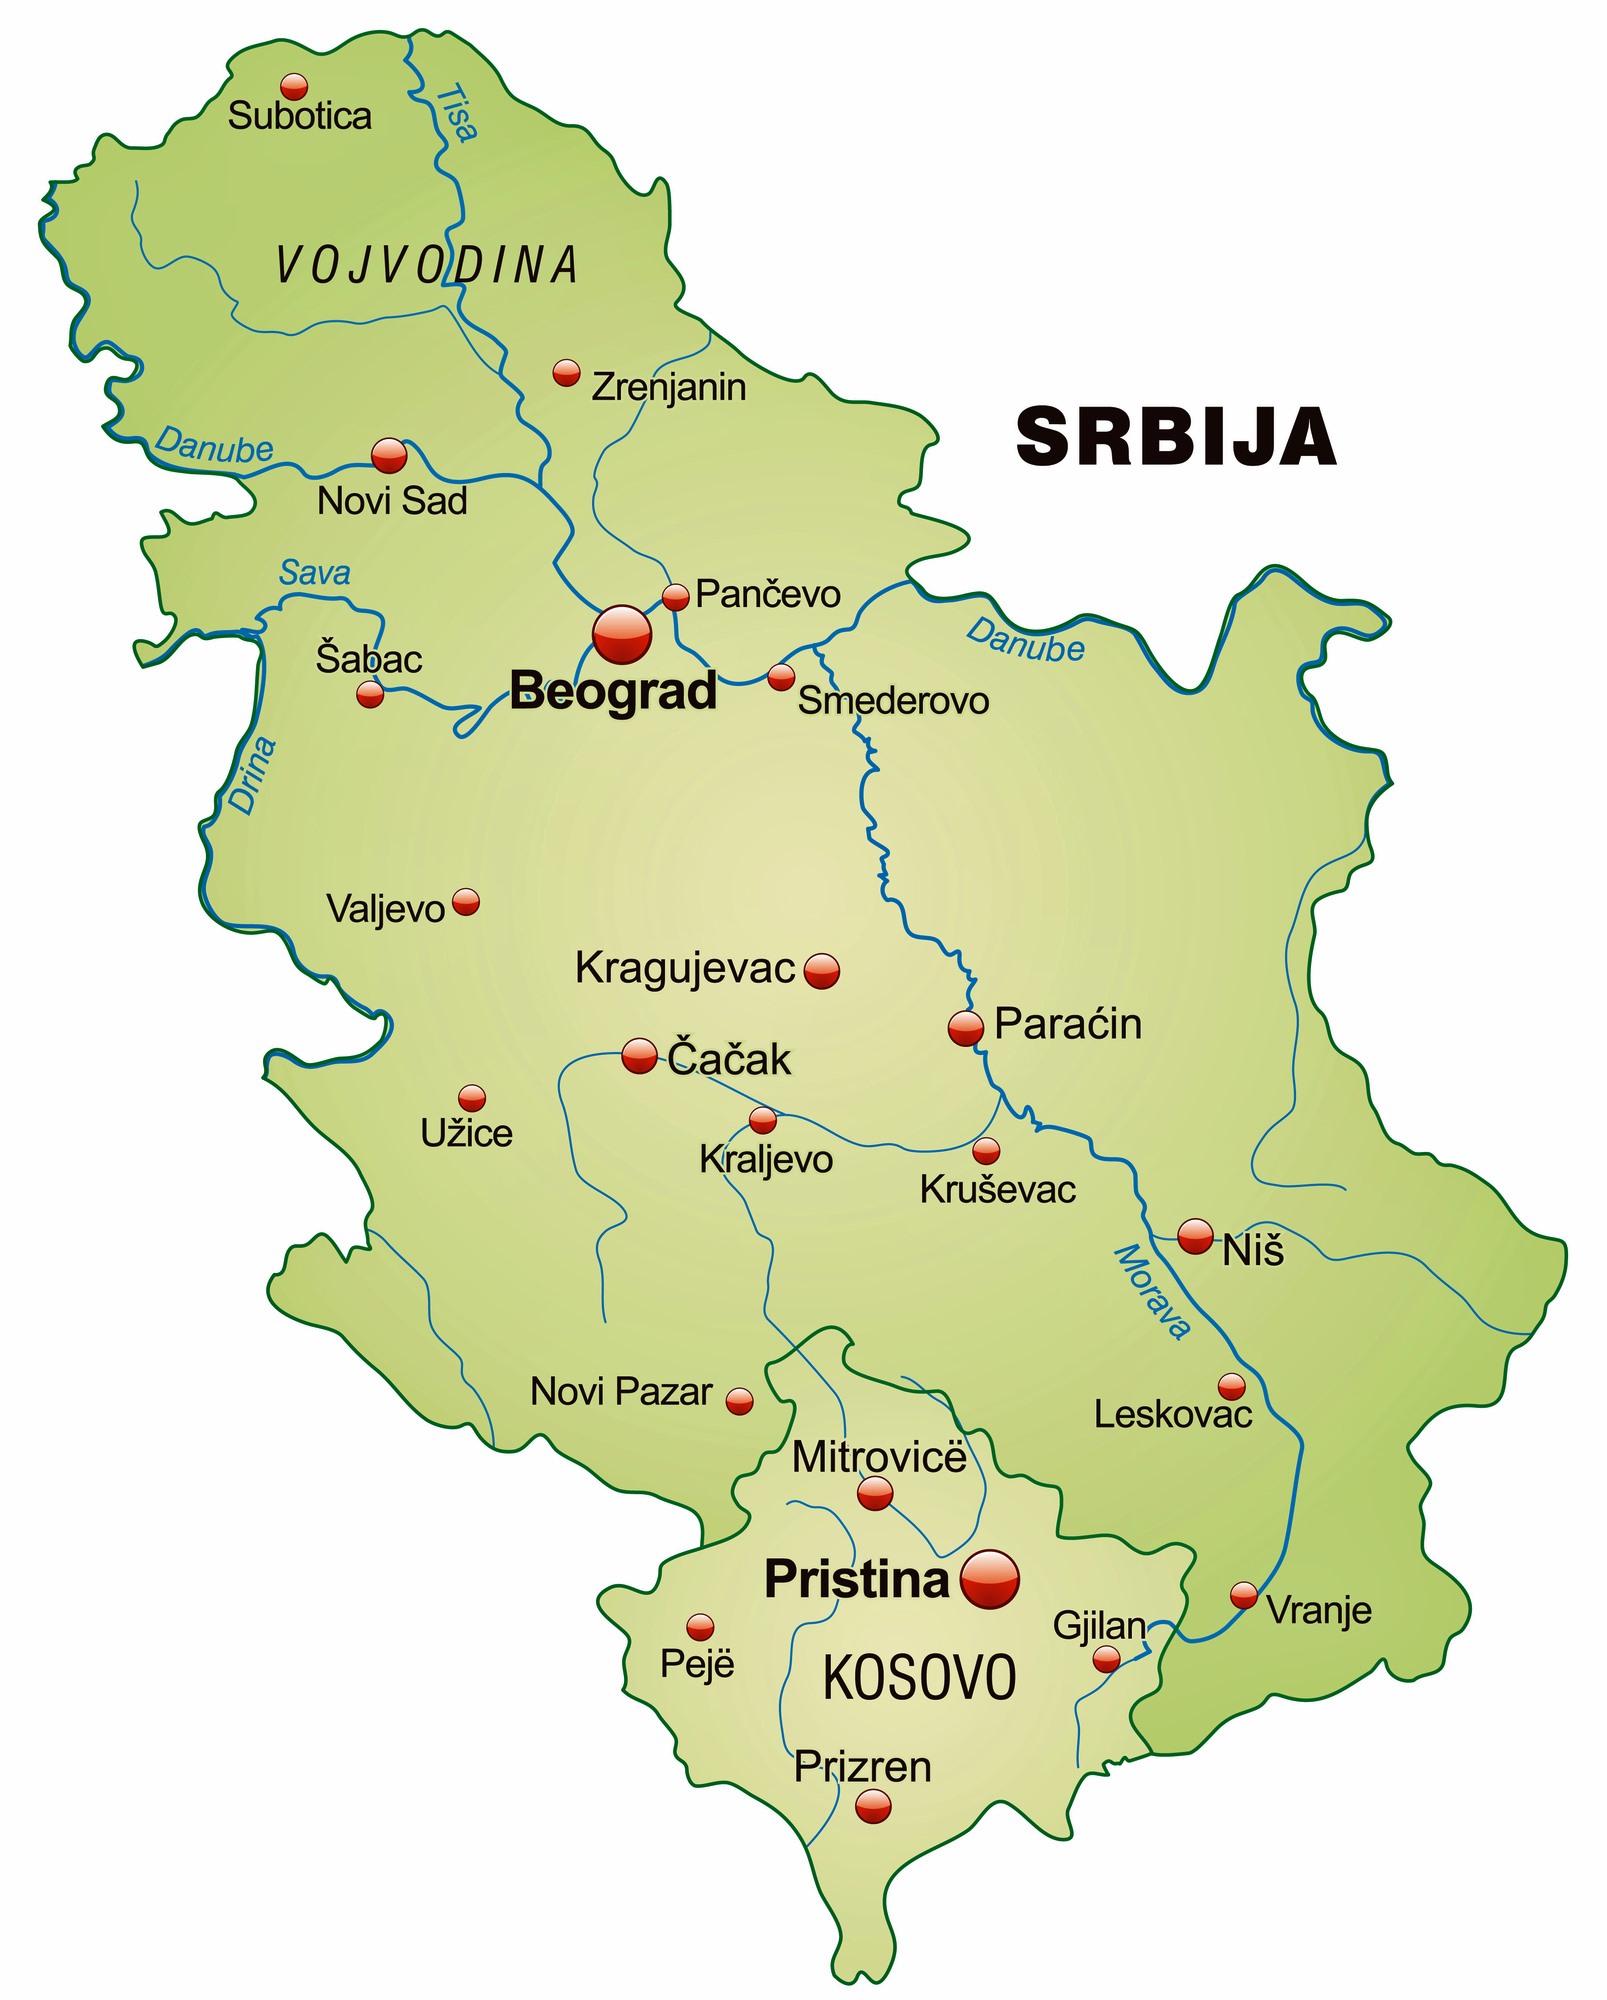 serbia travel guide pdf